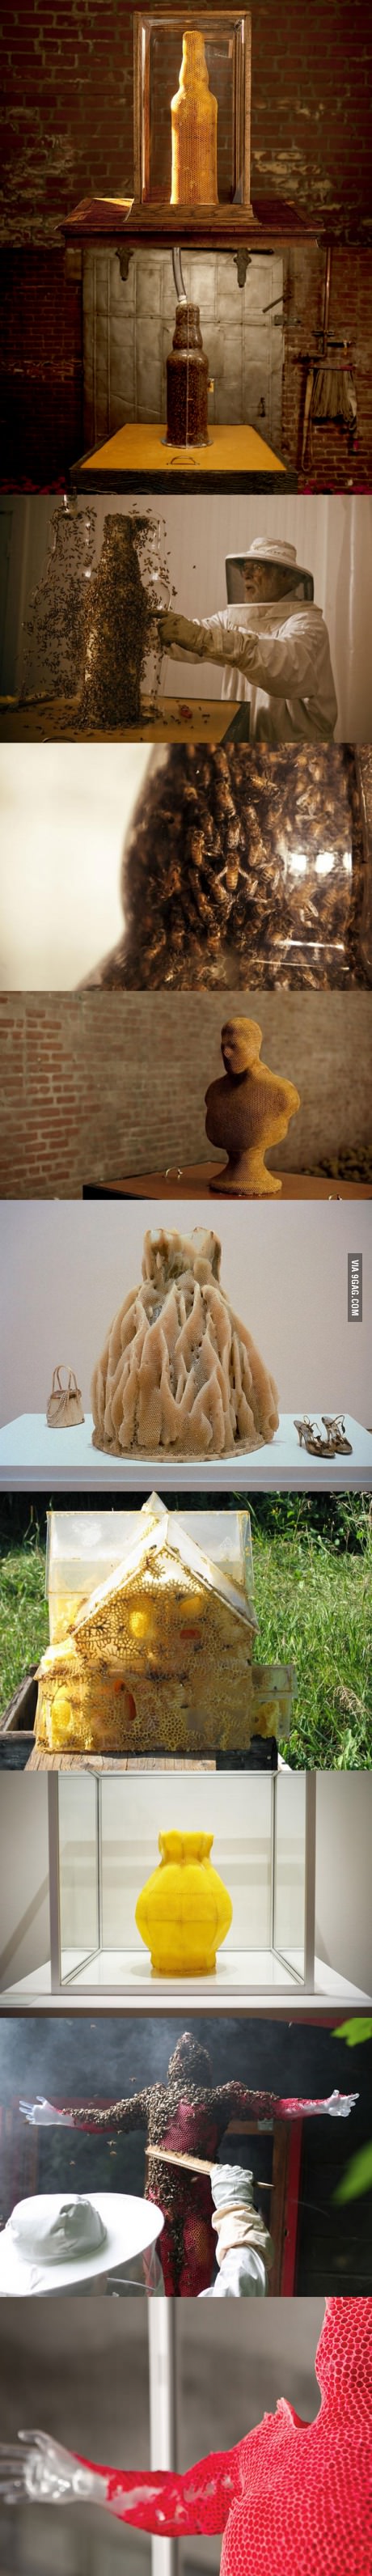 Amazing 3D Sculptures Built by Bees.